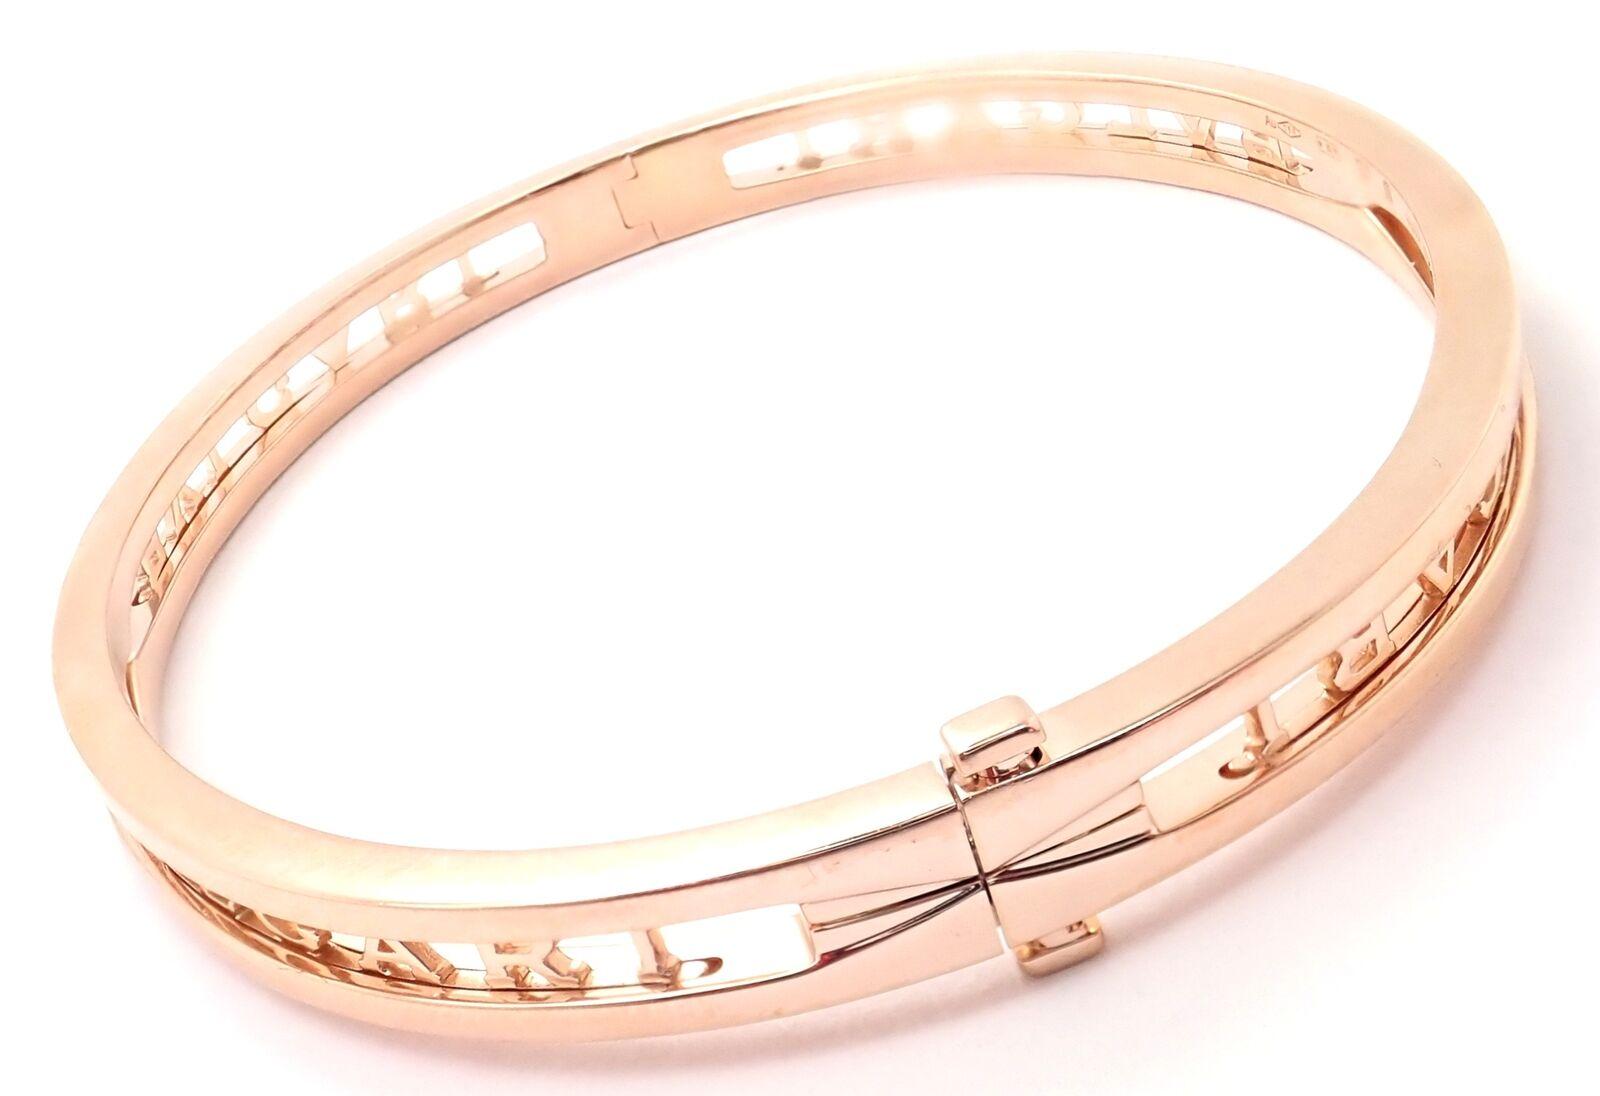 18k Rose Gold B-Zero B.Zero1 Medium Bangle Bracelet by Bulgari.
Details: 
Length: 6.7